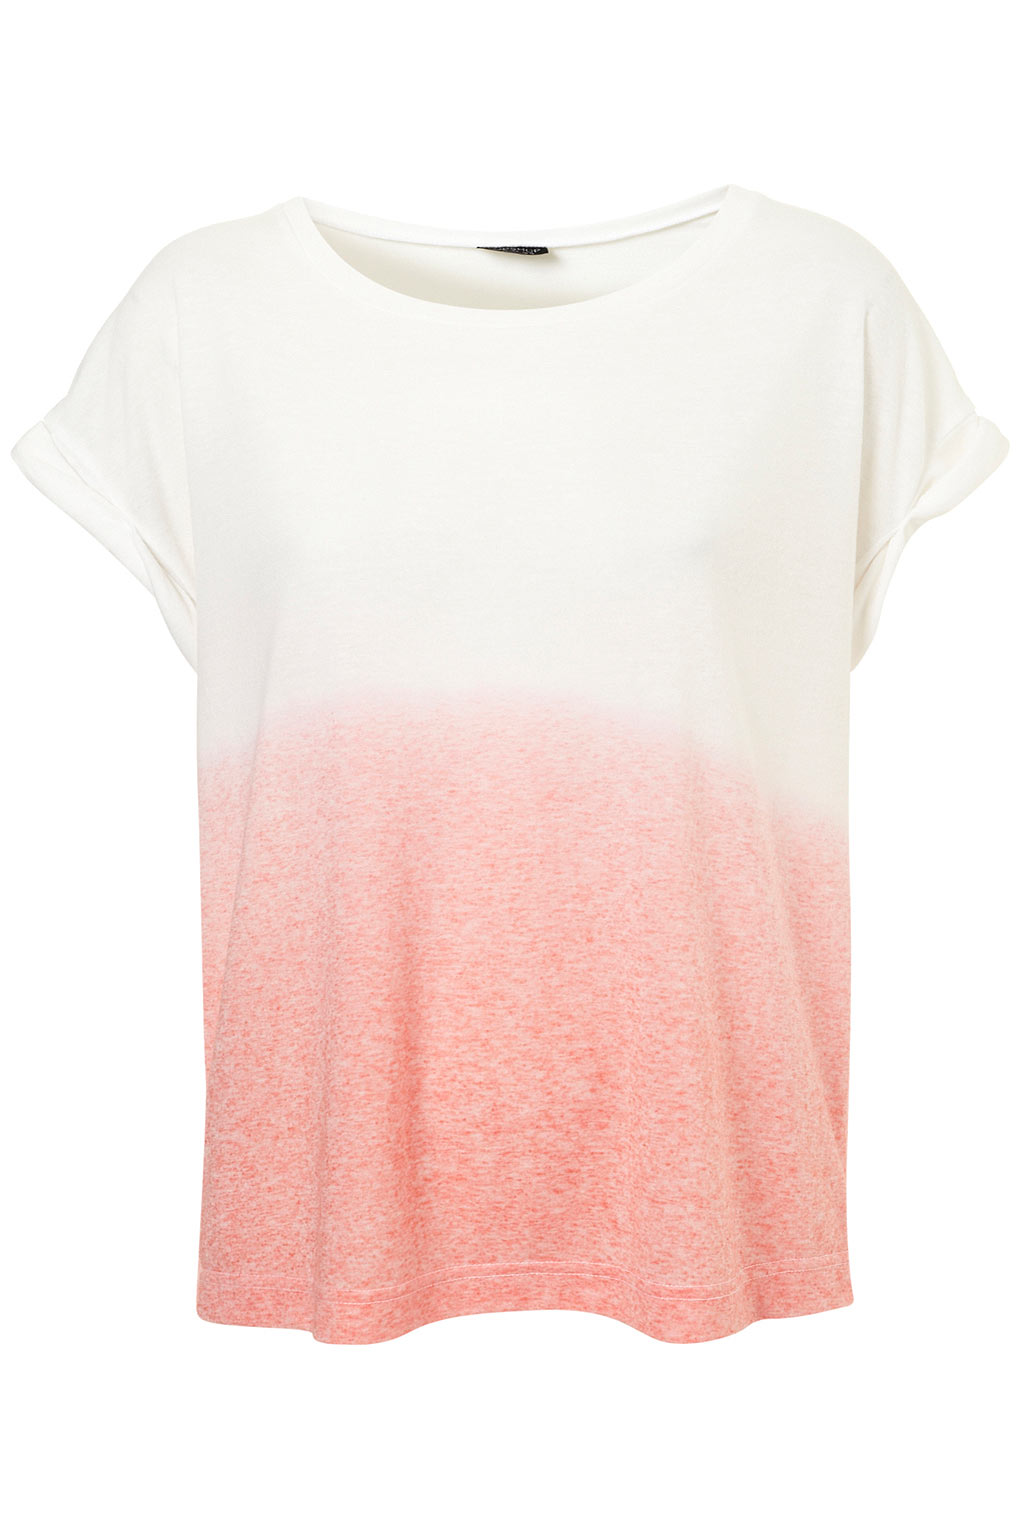 Topshop Dip Dye T-shirt in Pink | Lyst